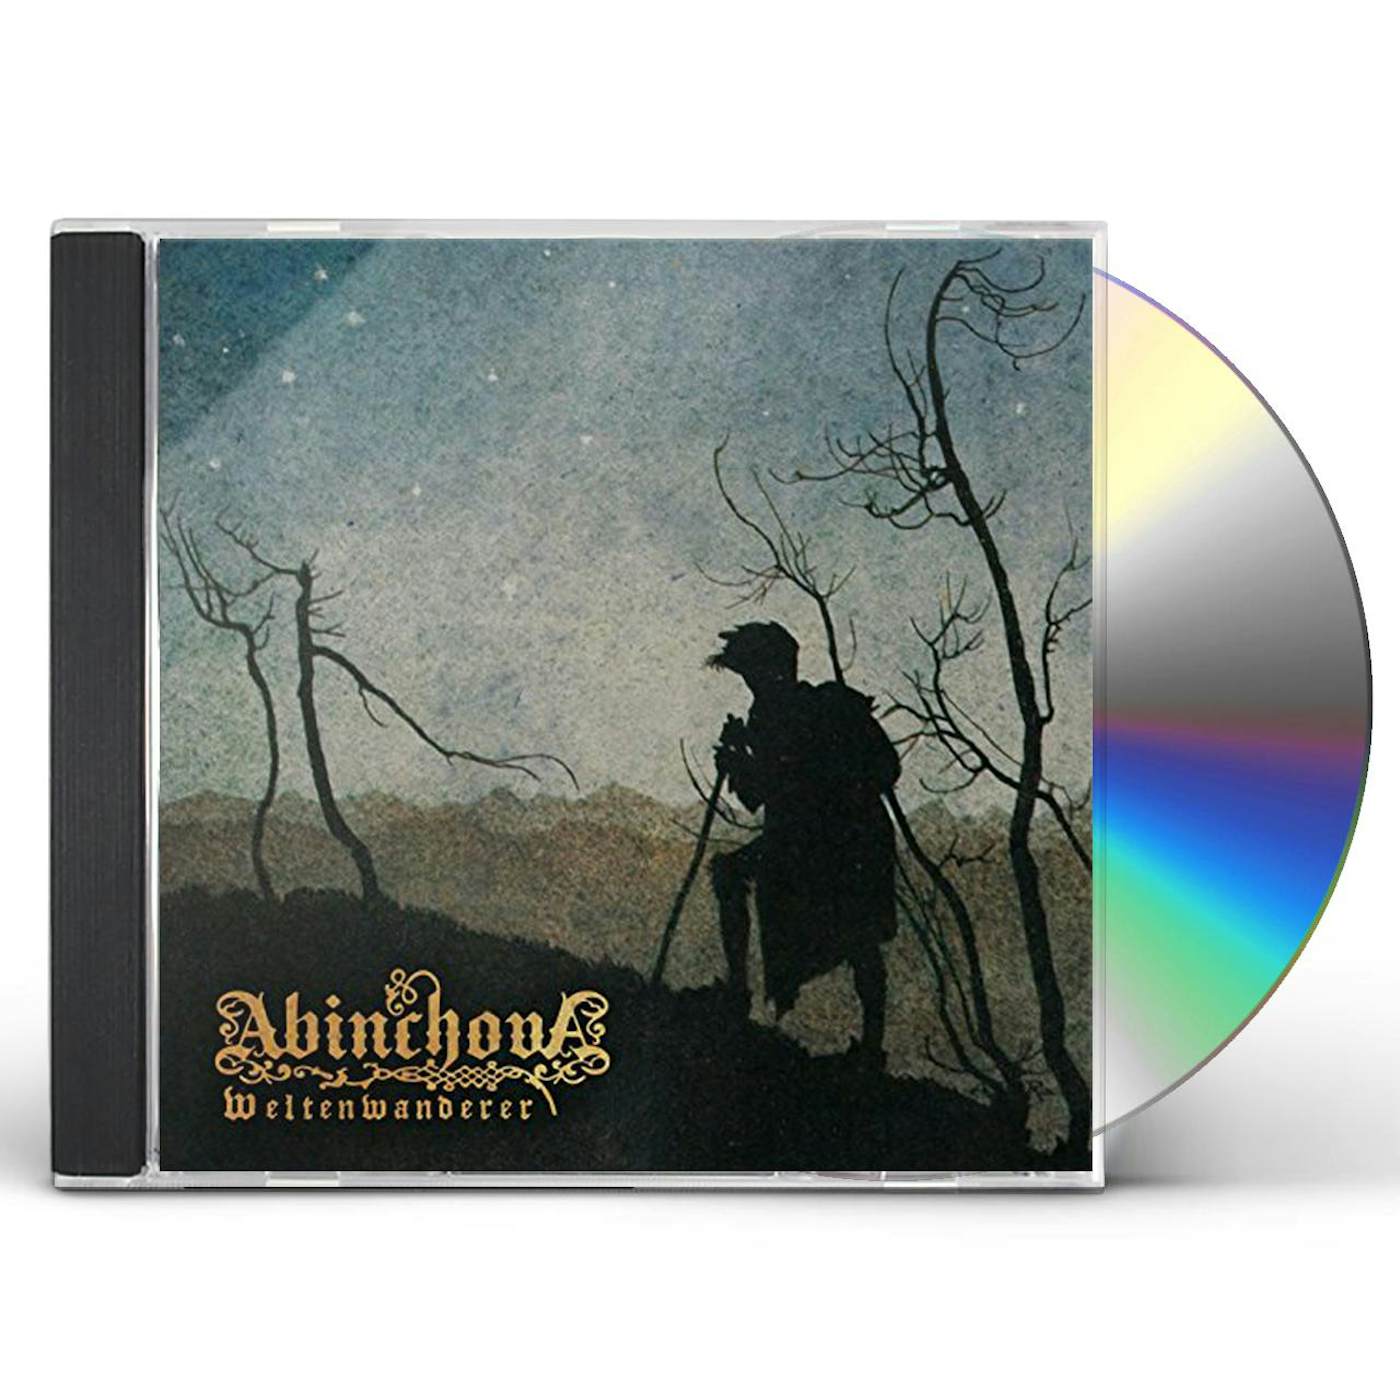 Abinchova WELTENWANDERER CD